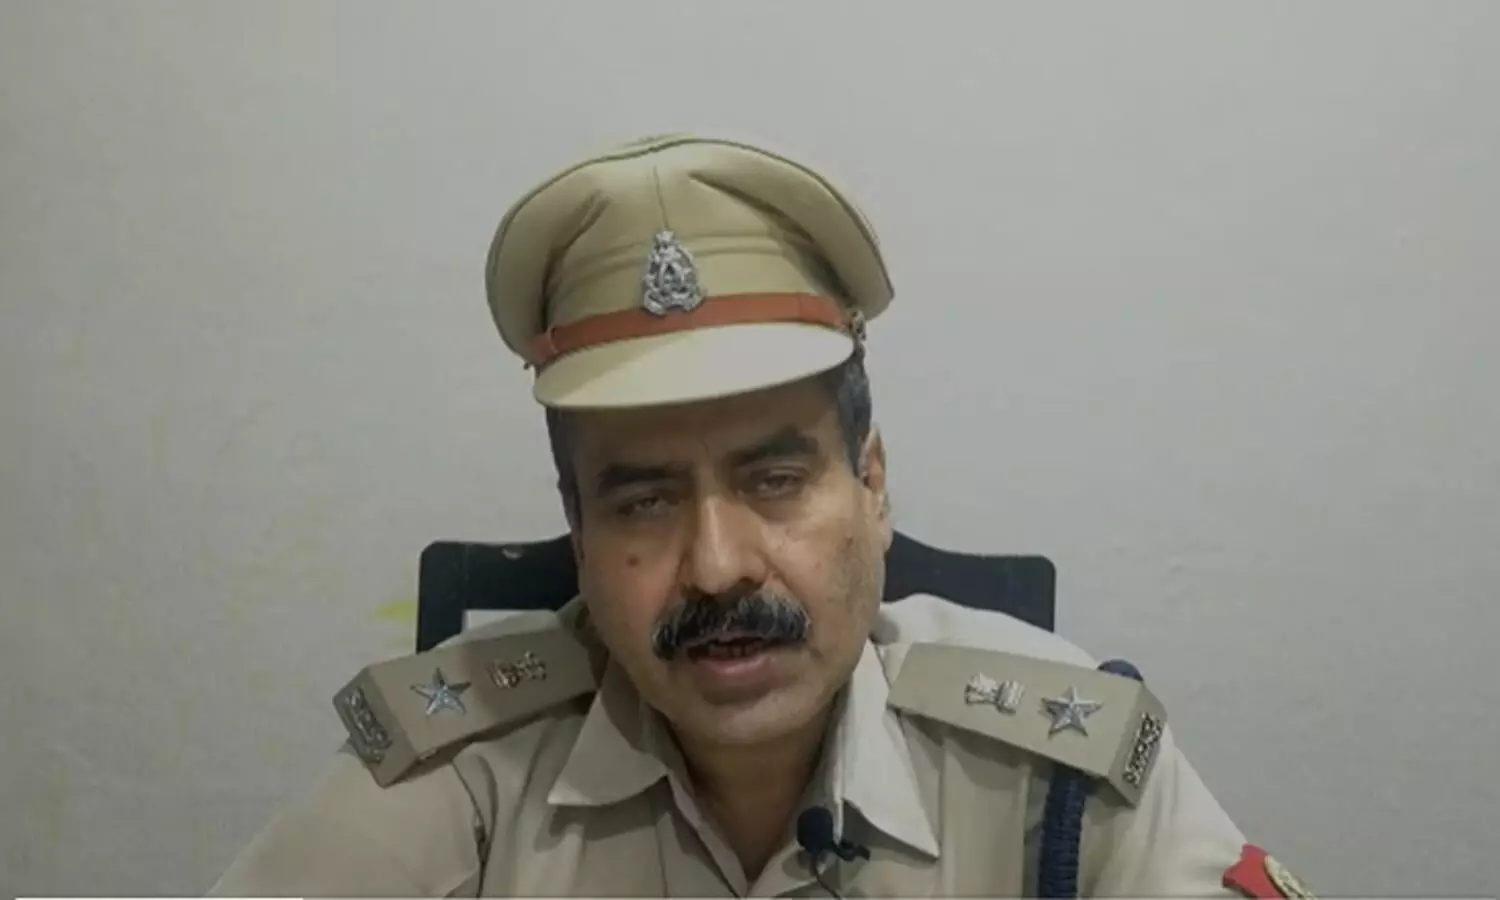 Superintendent of Police Dr. Sansar Singh